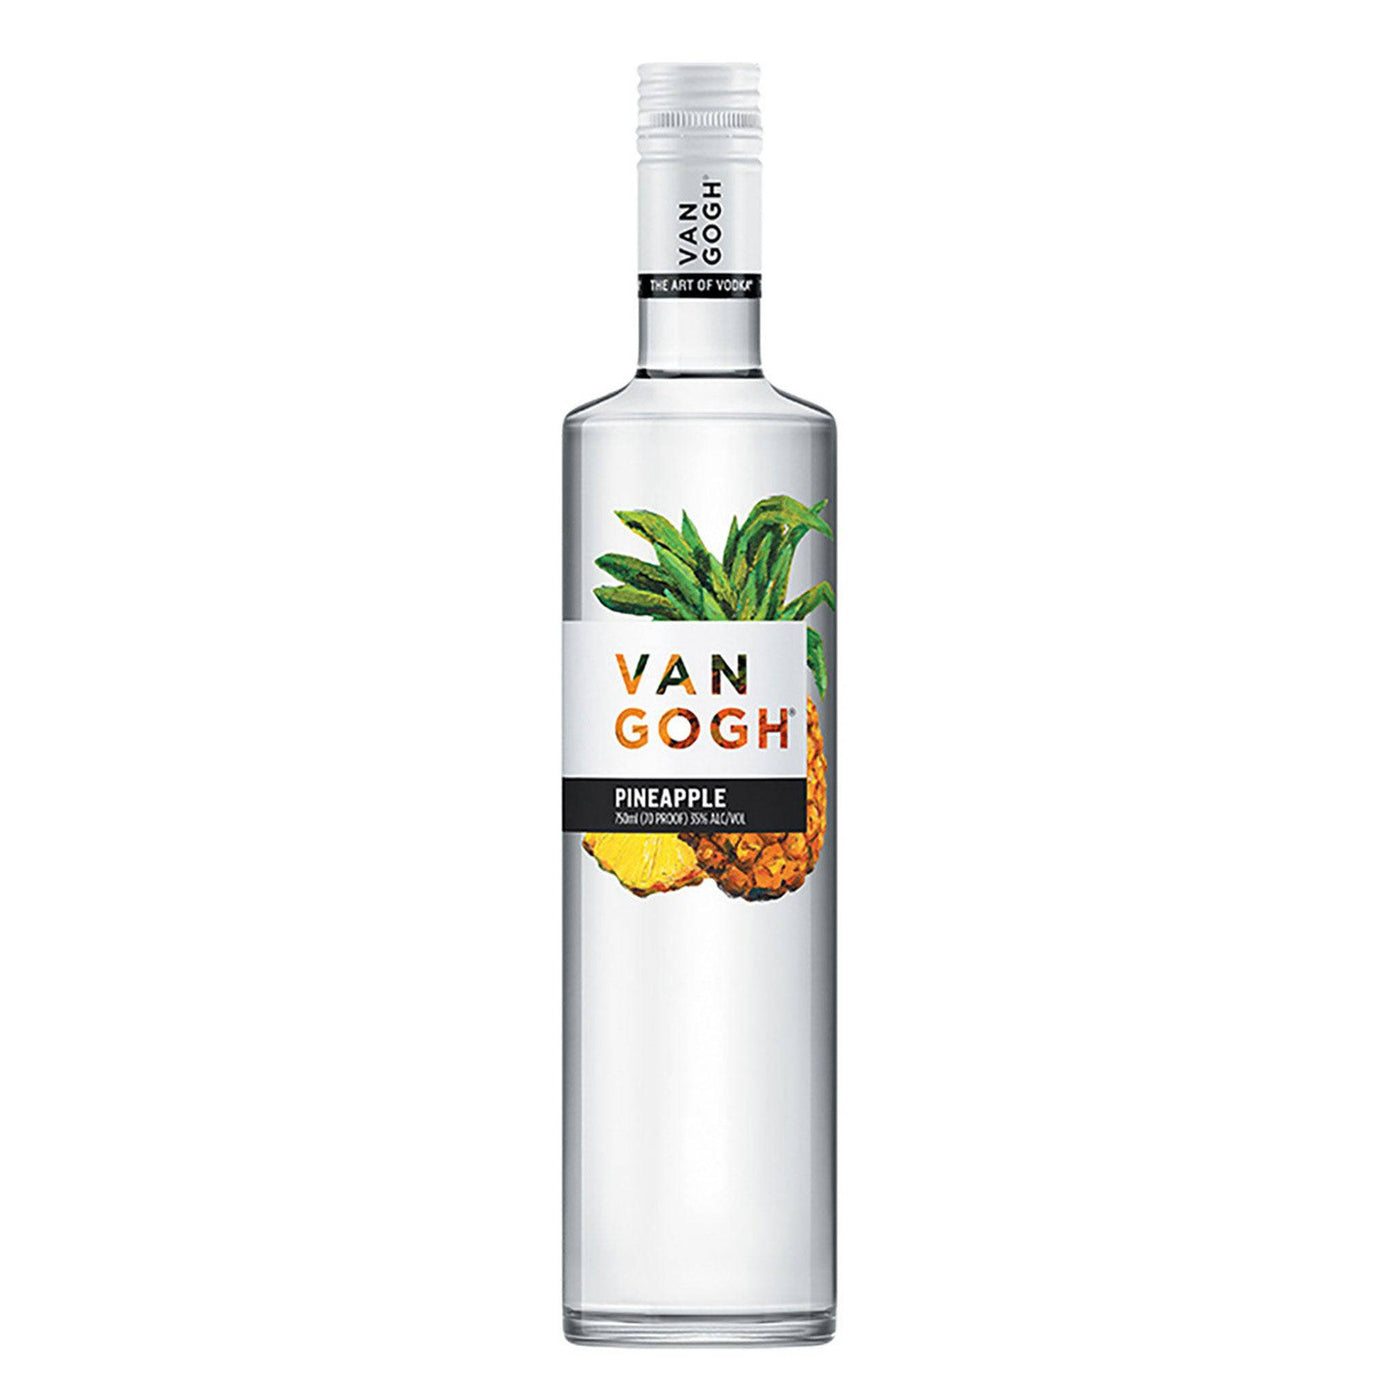 Van Gogh Pineapple Vodka - Spiritly